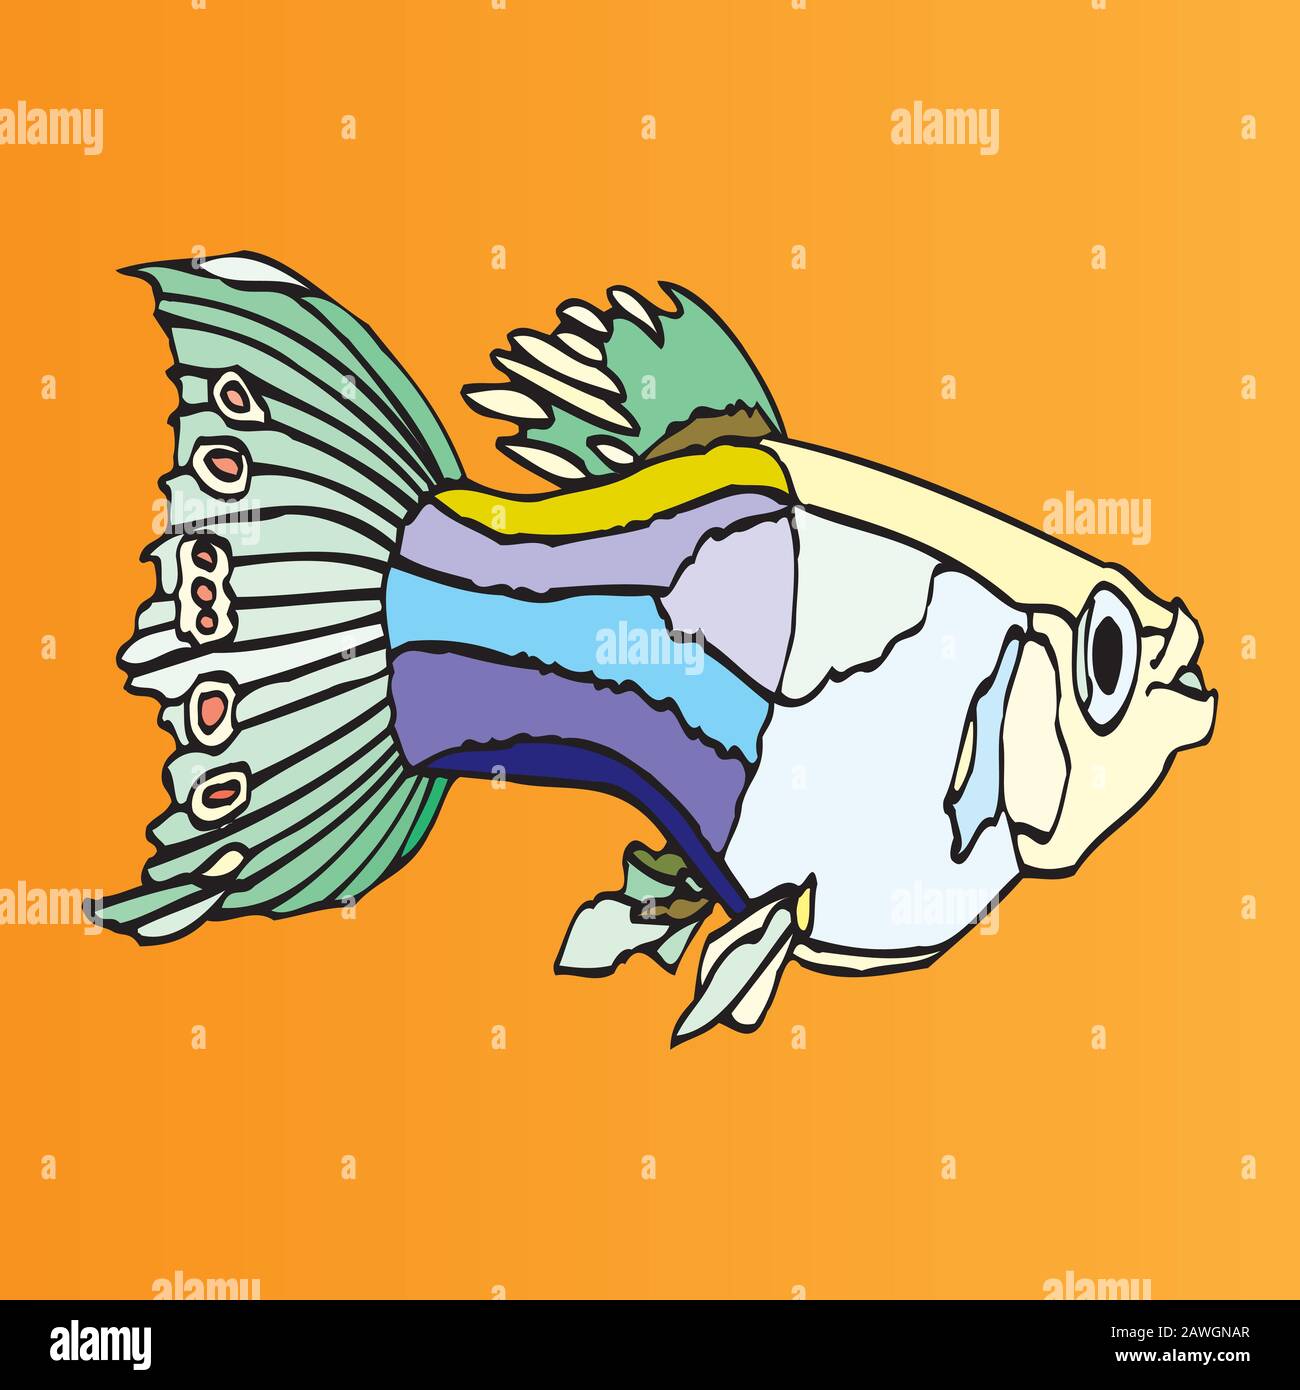 https://c8.alamy.com/comp/2AWGNAR/vector-aquarium-fish-silhouette-illustration-colorful-cartoon-flat-aquarium-fish-icon-for-your-design-2AWGNAR.jpg